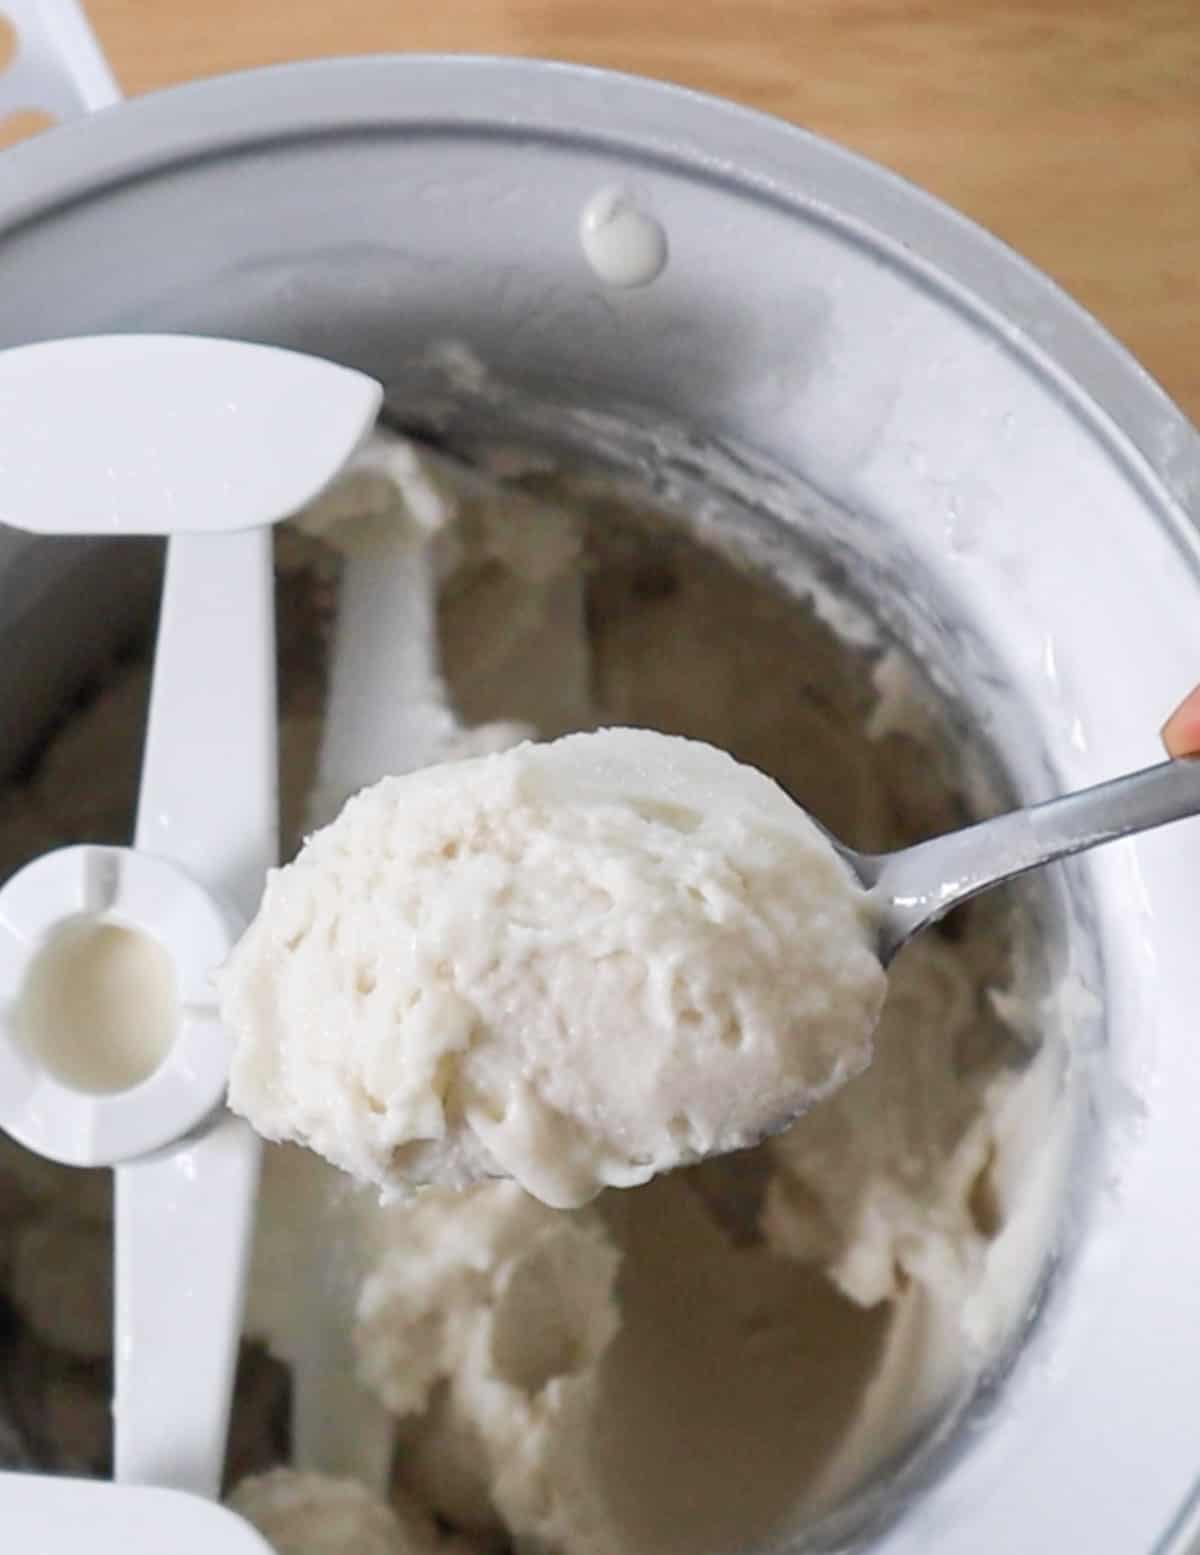 scopping freshly churned ice cream